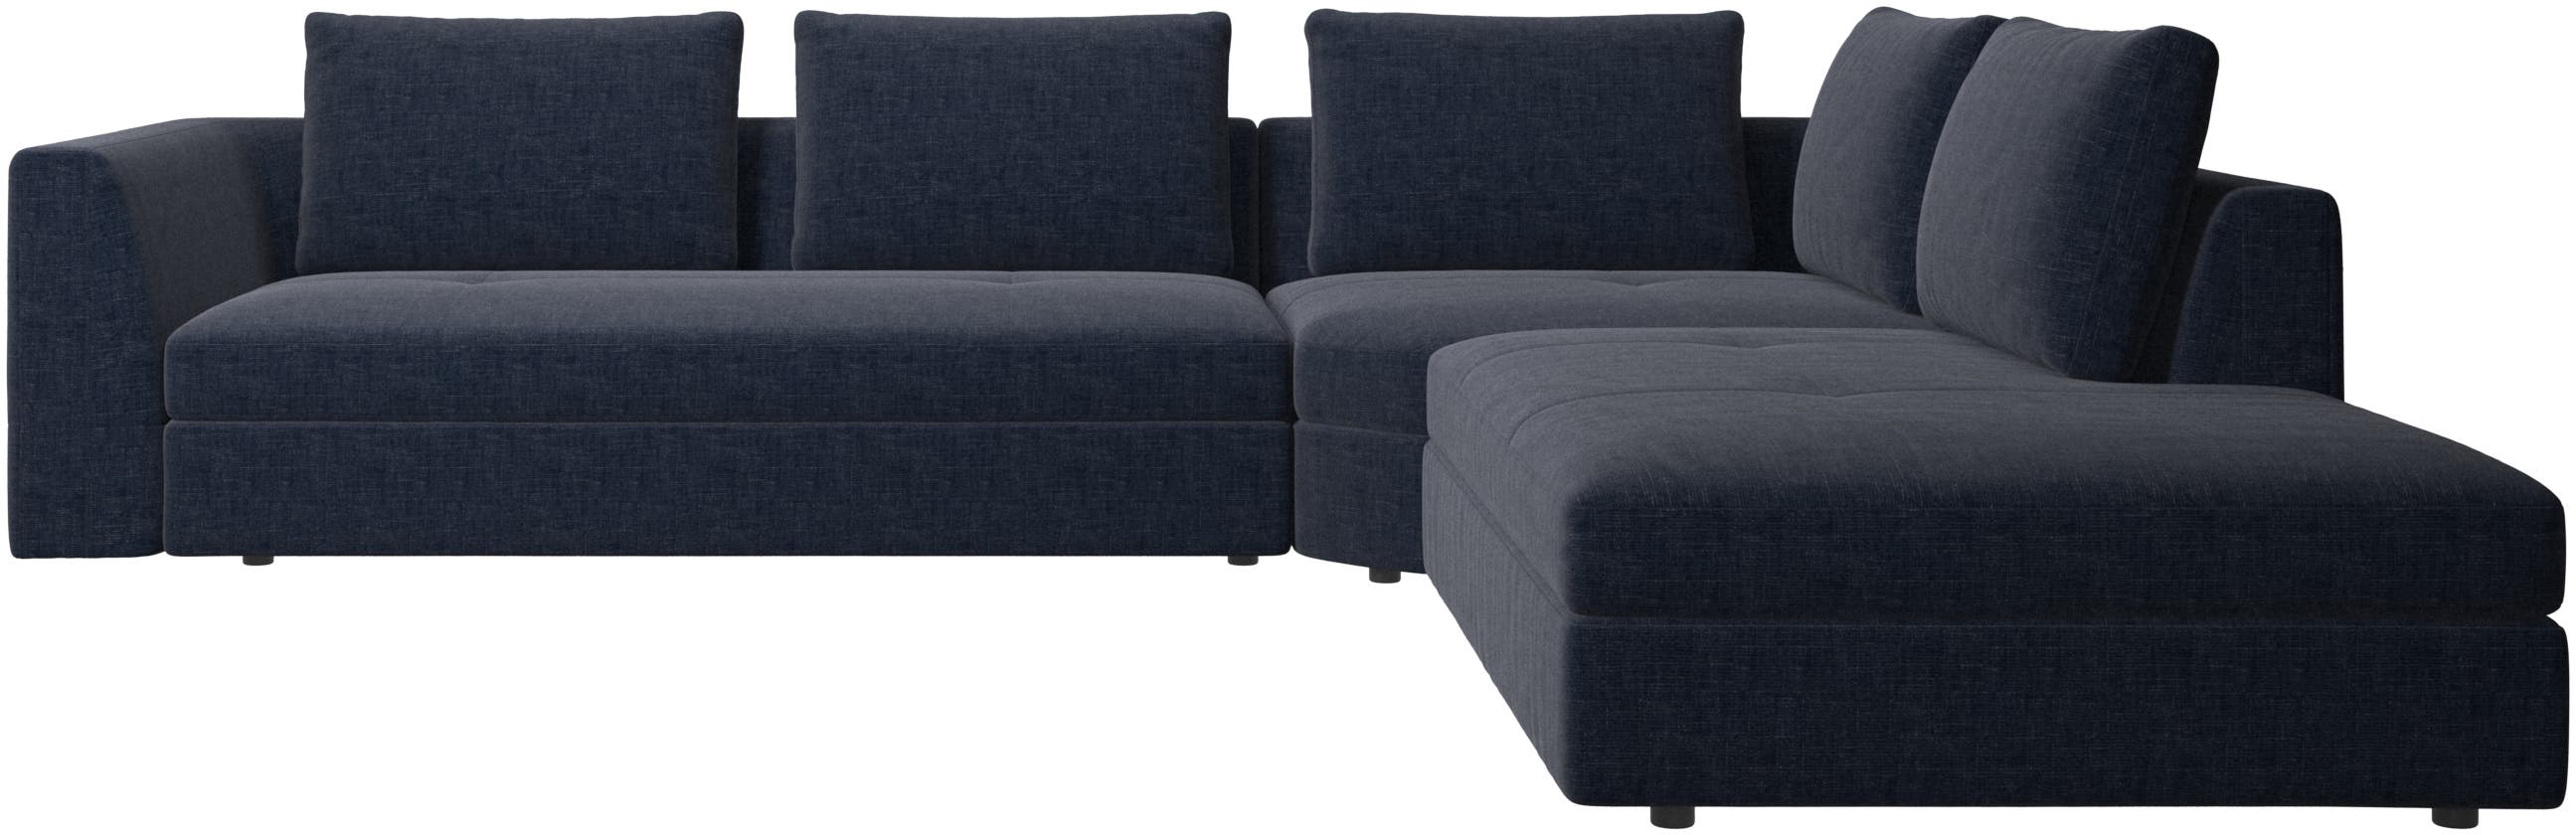 Bergamo corner sofa with lounging unit